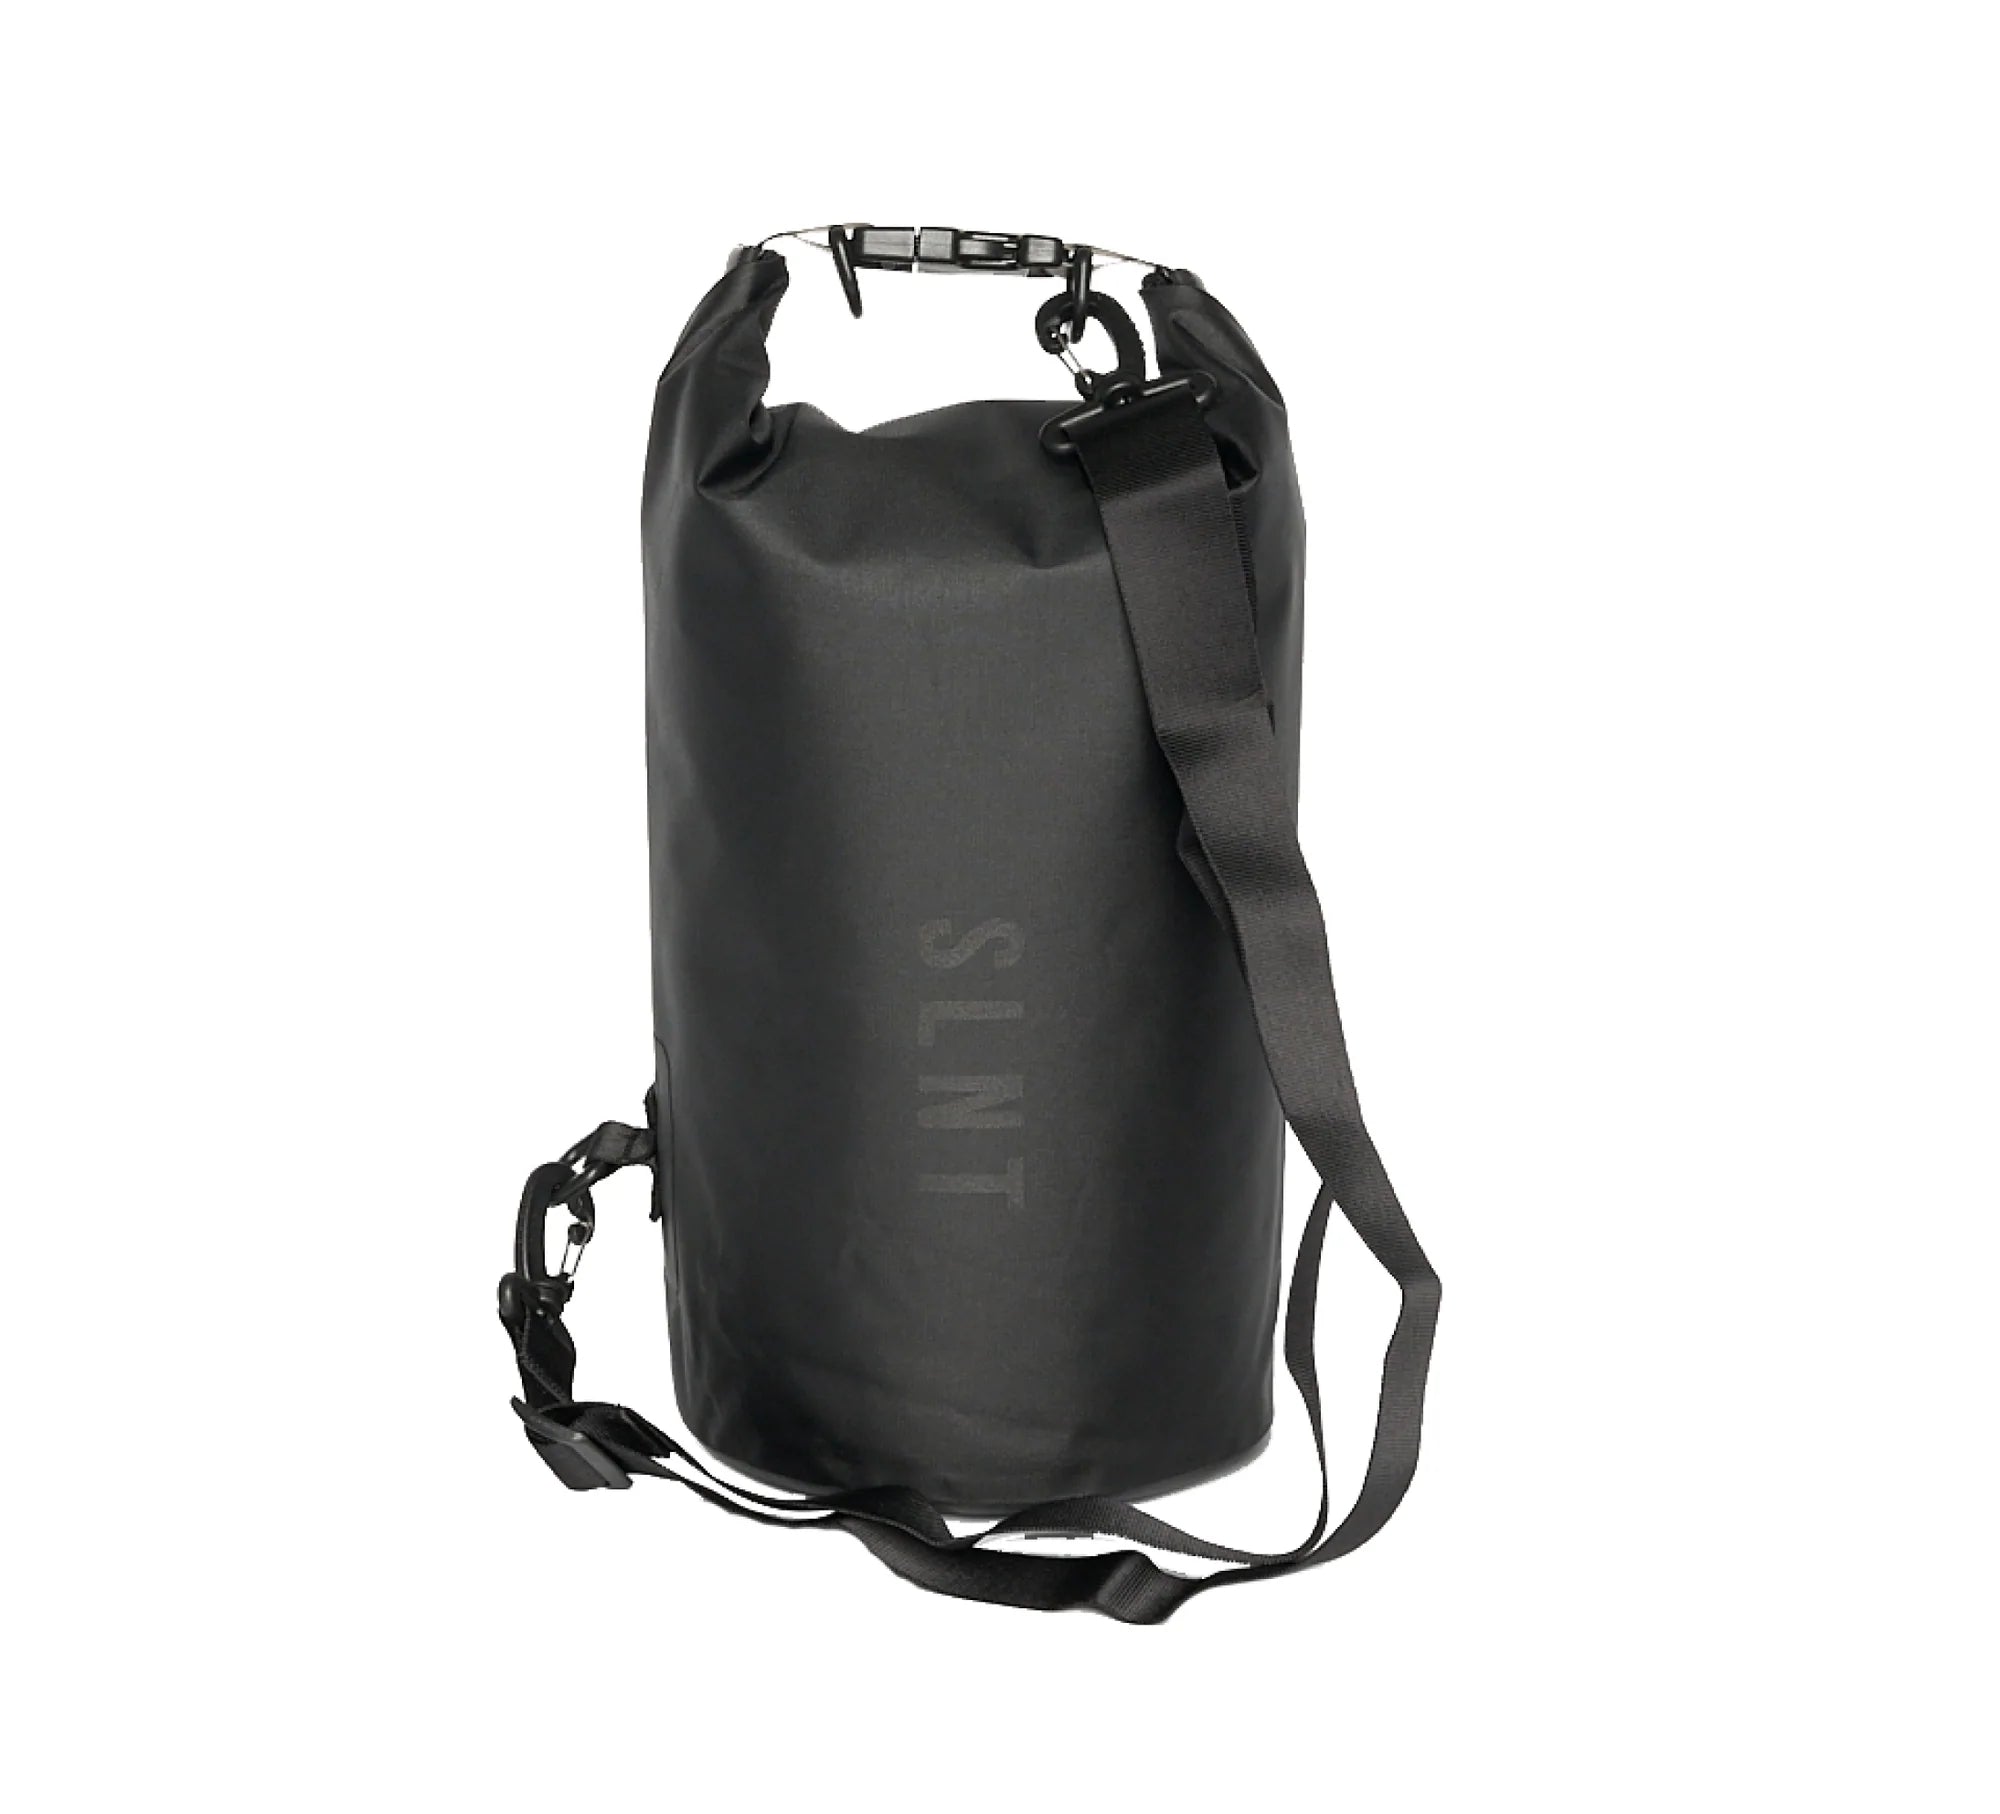 SLNT , Waterproof Faraday Phone Bag, Black, Phone, Faraday Cage